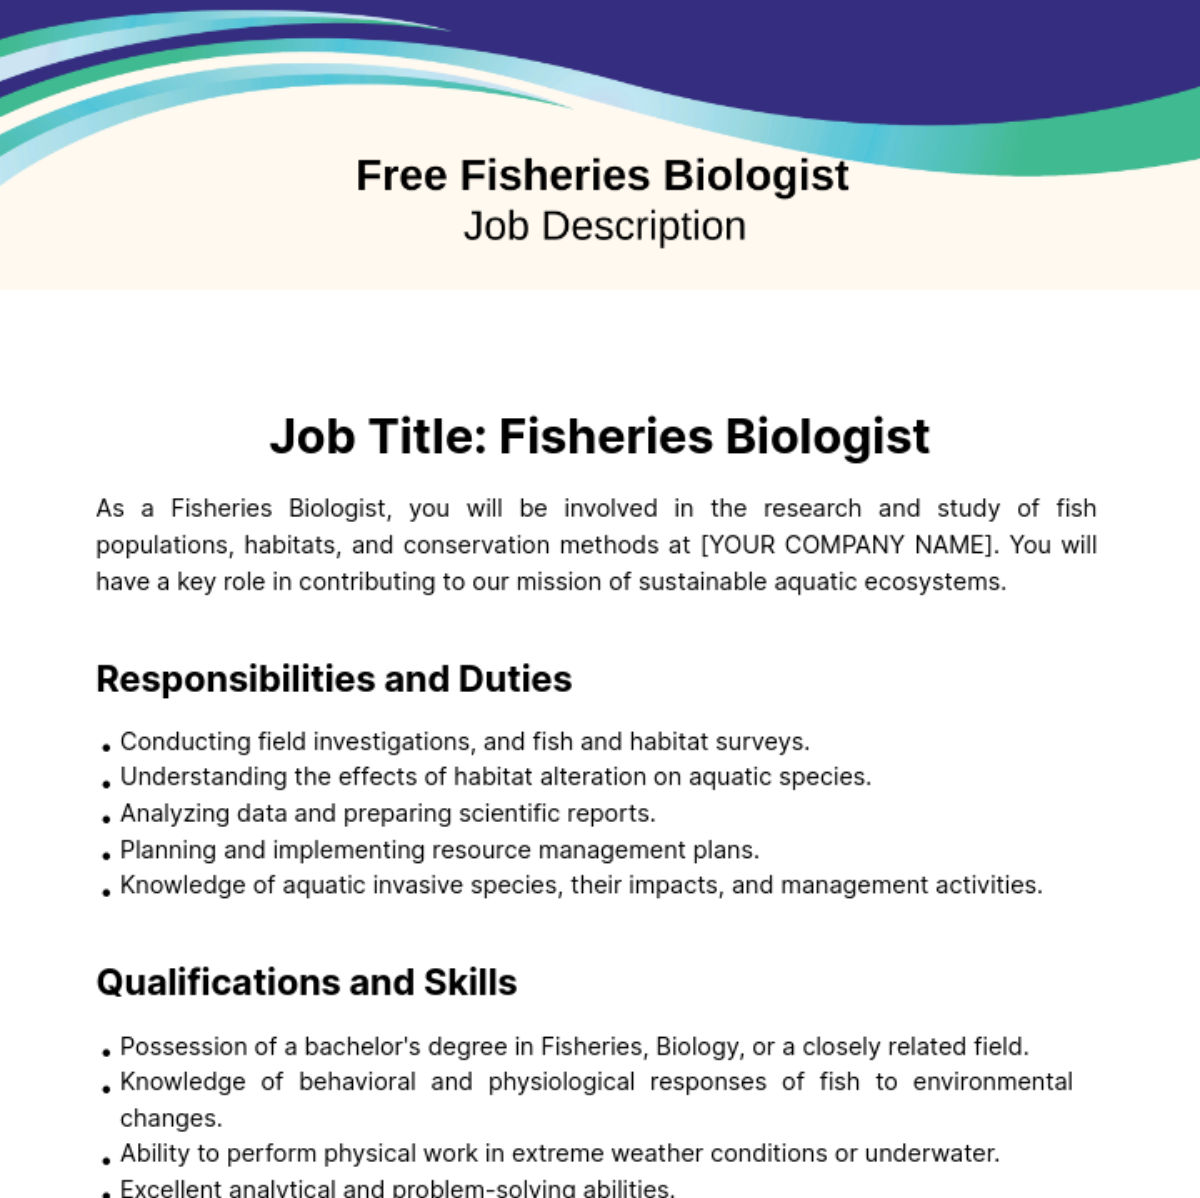 Free Fisheries Biologiest Job Description Template